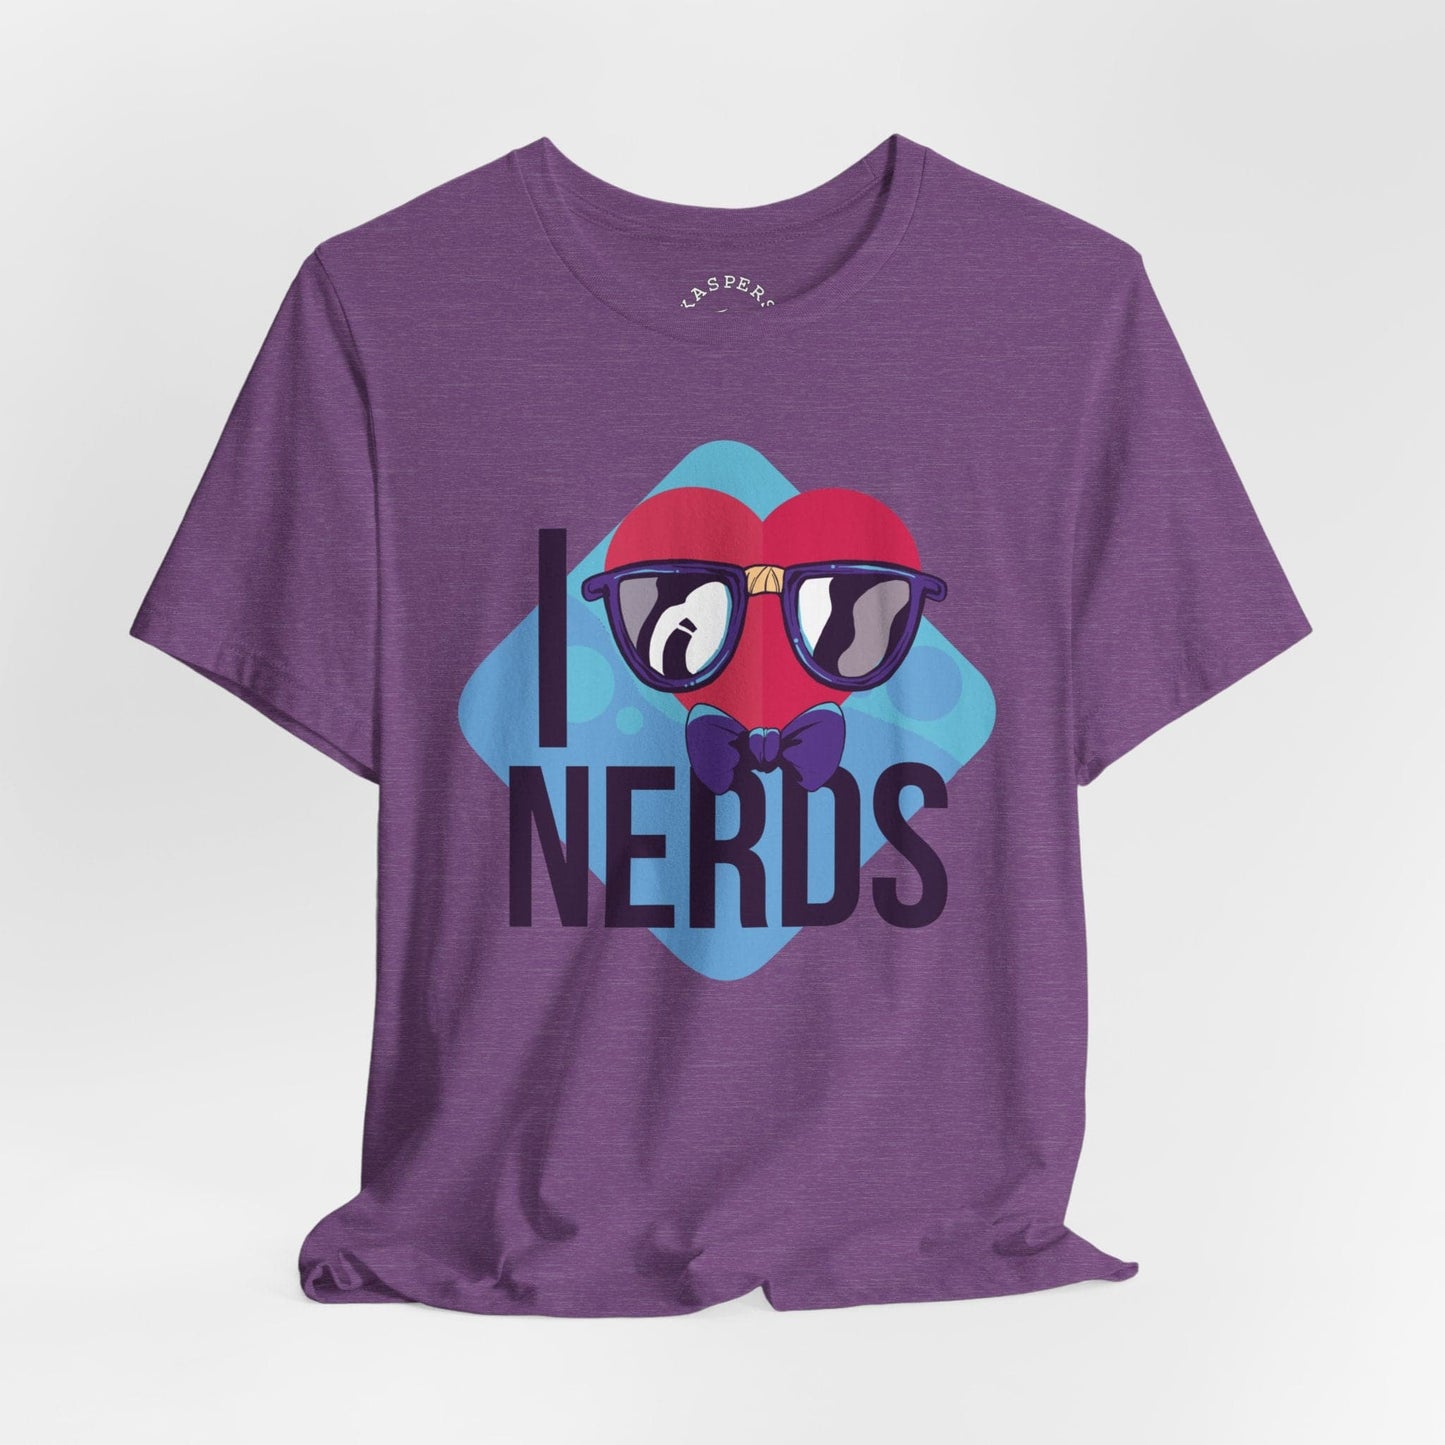 I Love Nerds T-Shirt